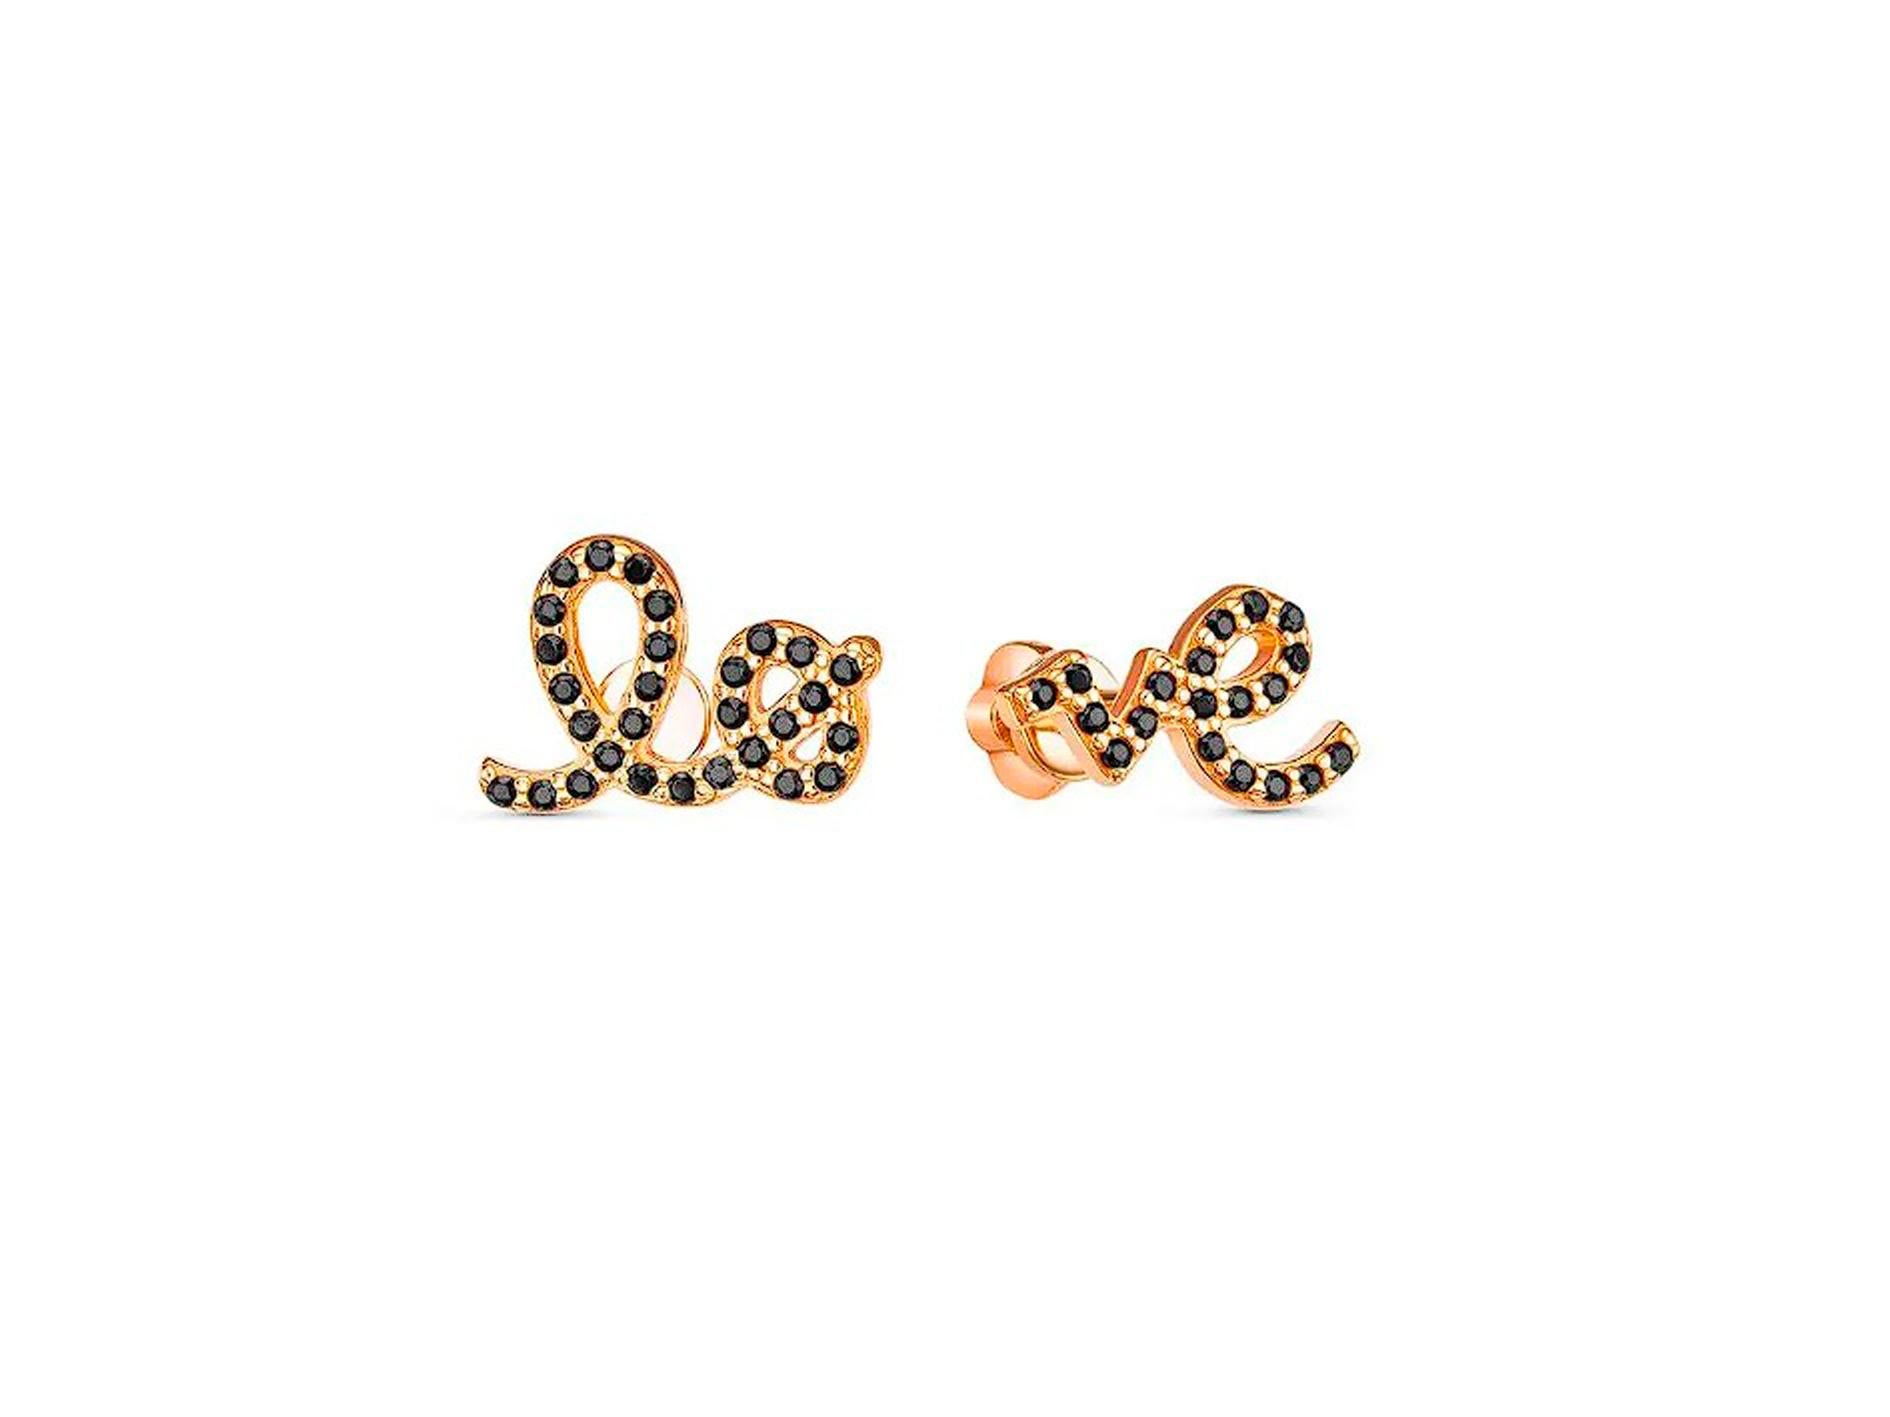 Love earrings studs 14k gold. 
LO + VE Asymmetrical Stud Earrings. Minimalist Love Earrings, 14K Solid Gold Love Studs, Cute Love Earrings Gift for Girlfriend. Beautifull earrings for everyday wearing. 

Metal: 14 karat gold
Weight: 1.9 g.
Size: 